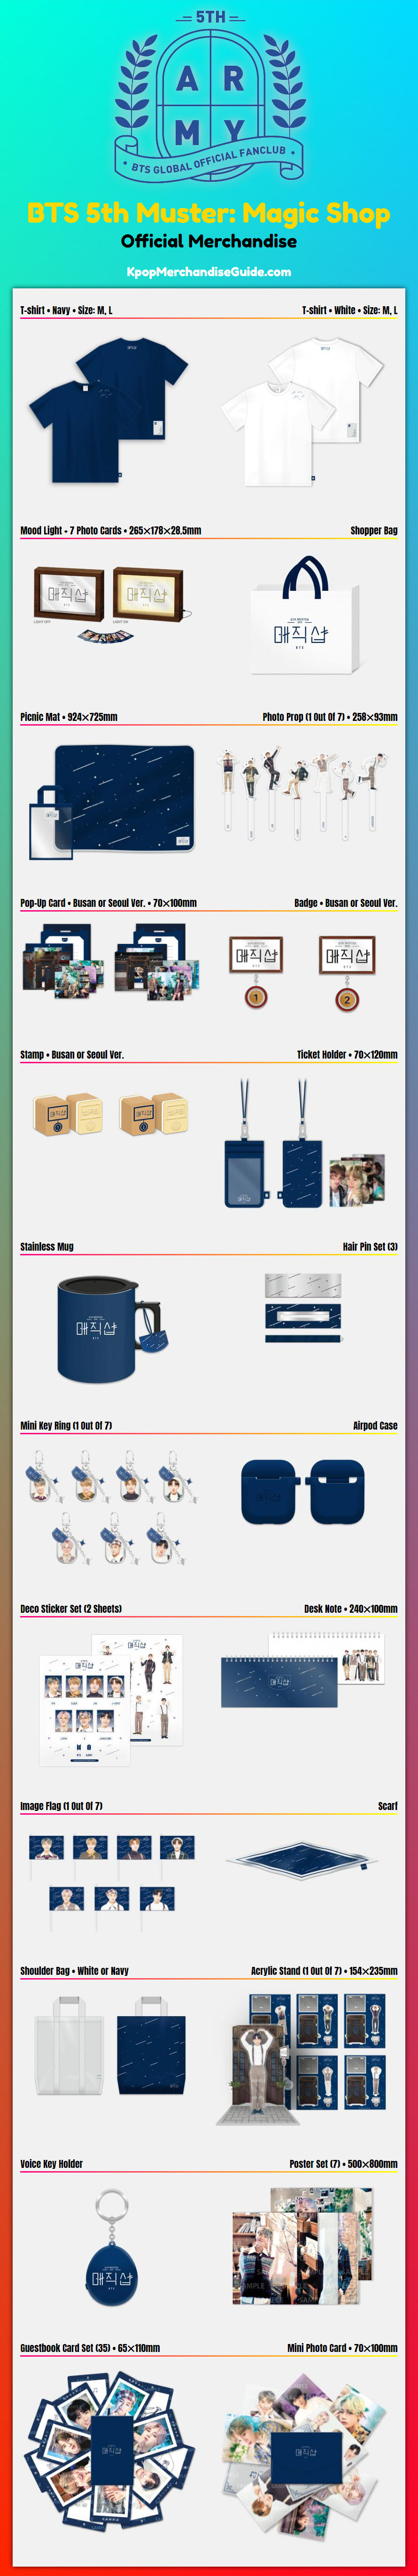 BTS 5th Muster: Magic Shop Merchandise